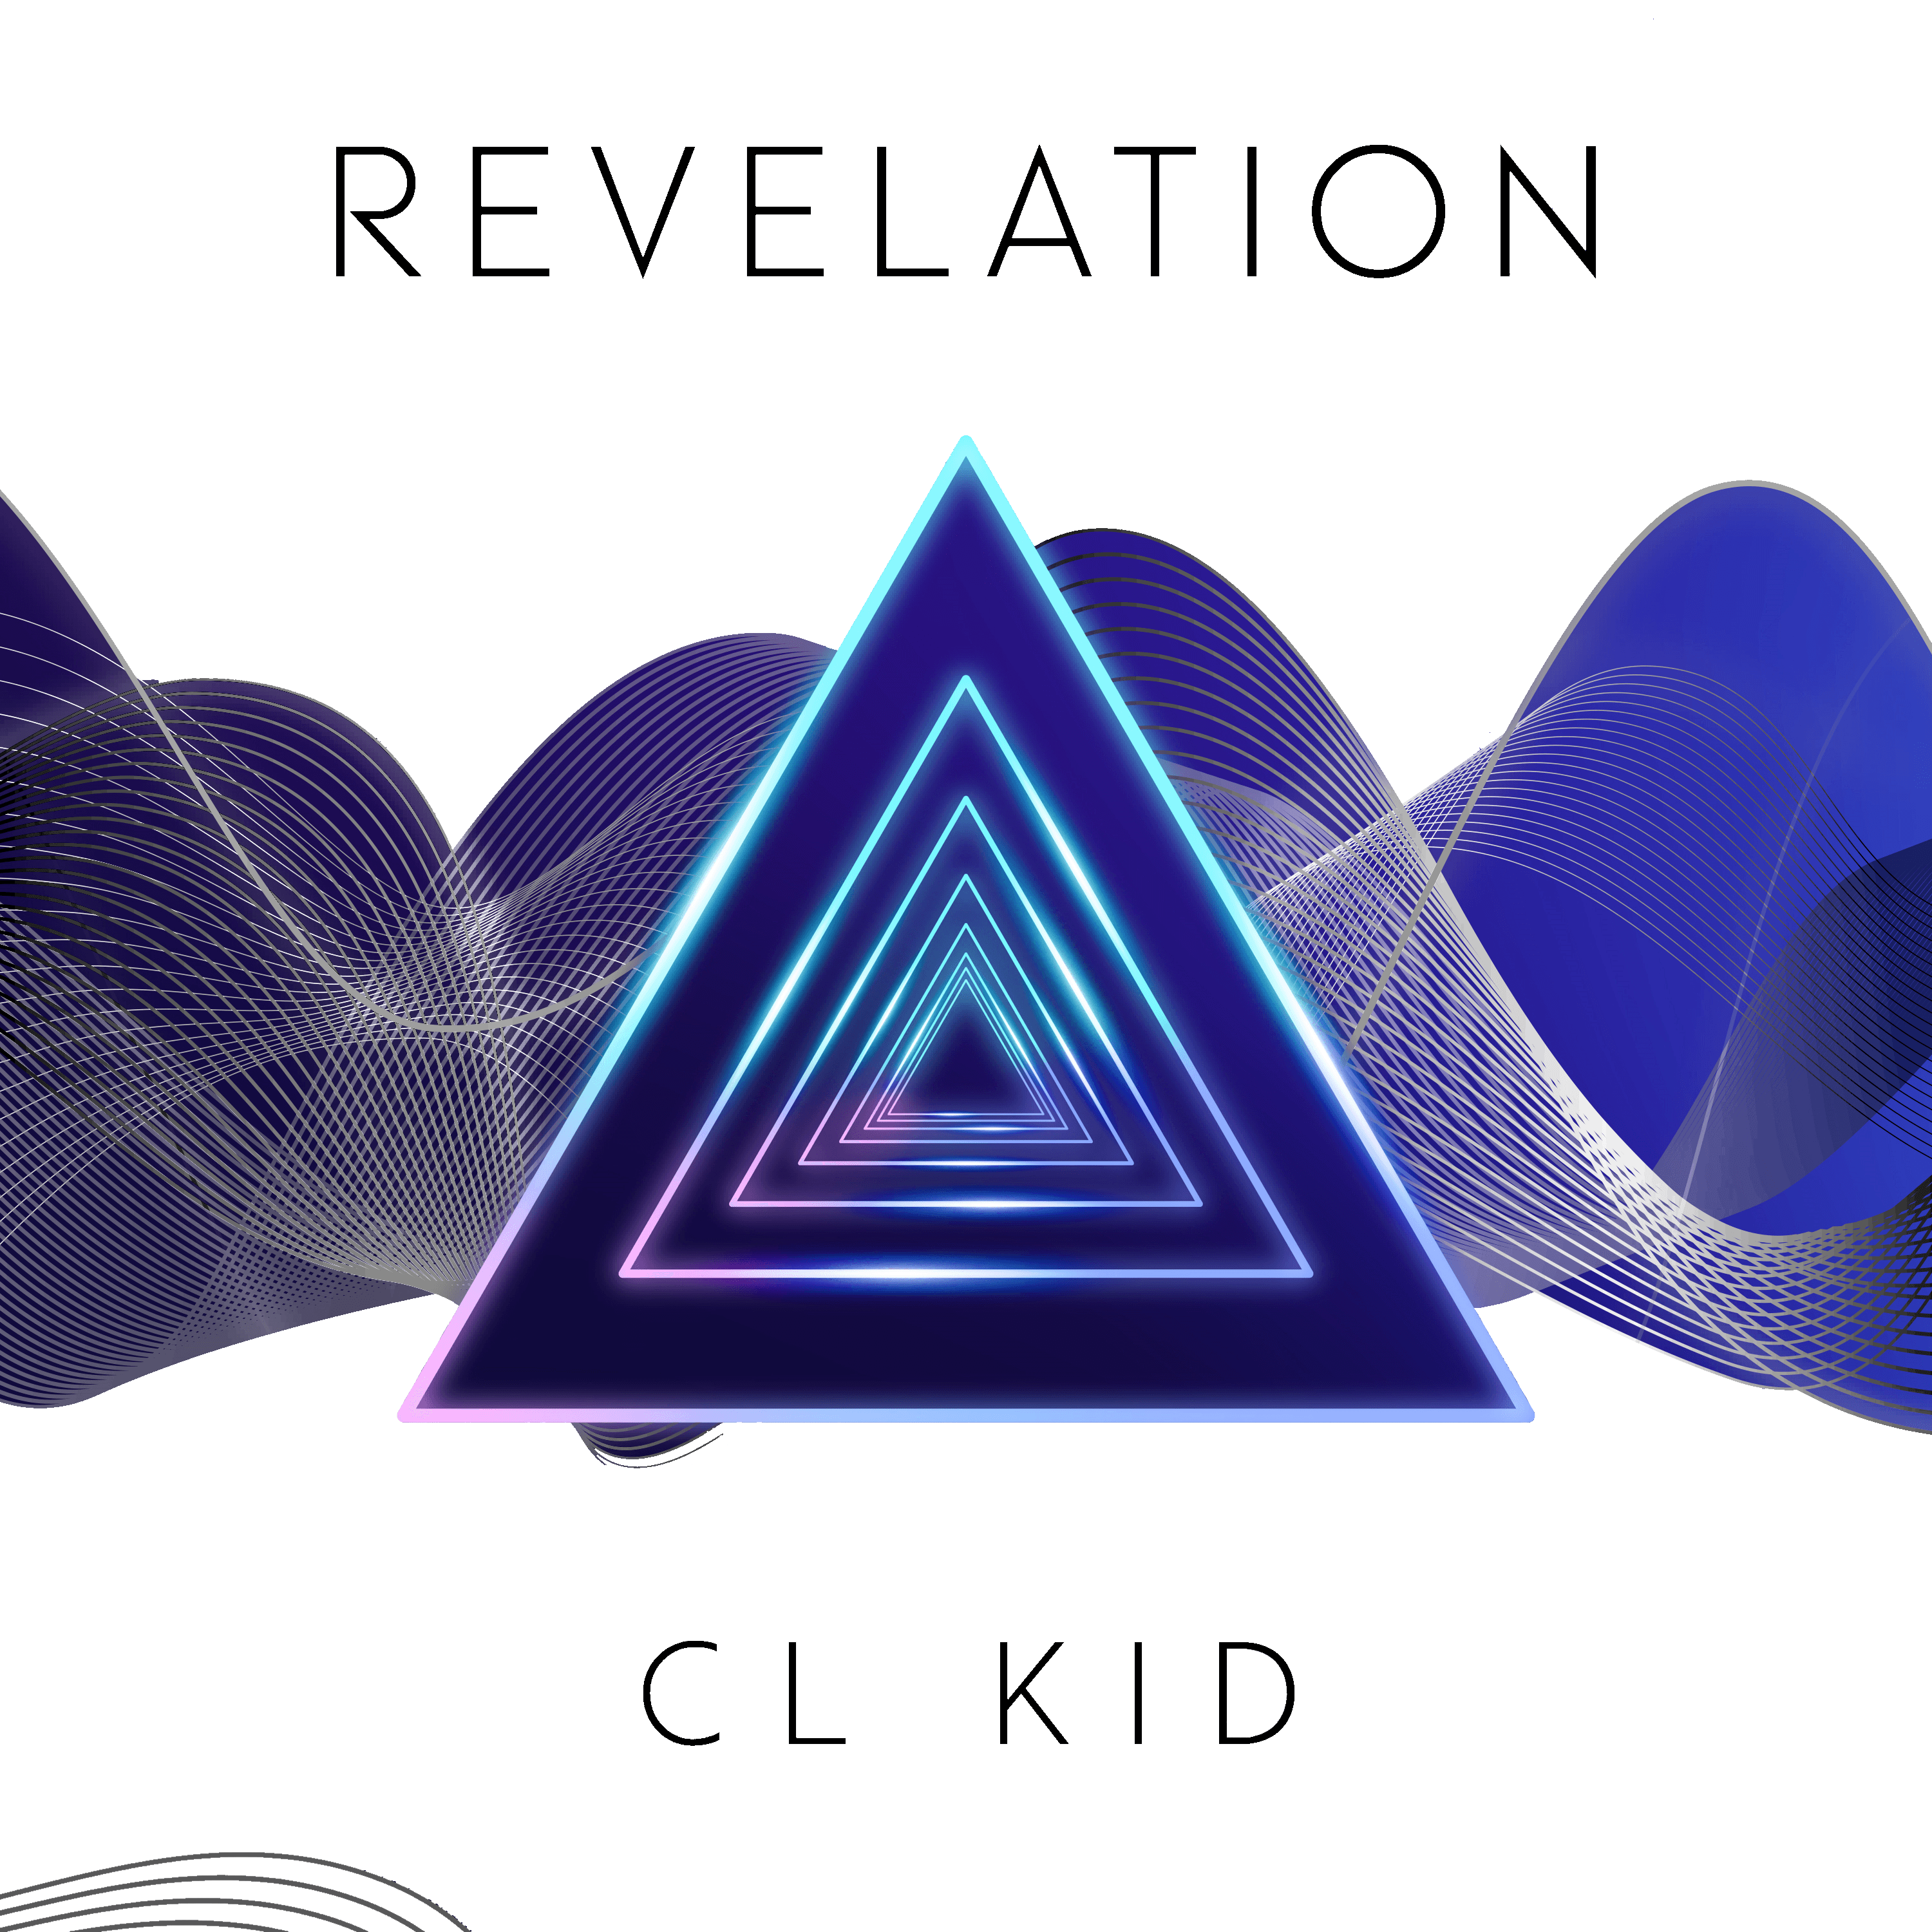 Revelation - CL KID